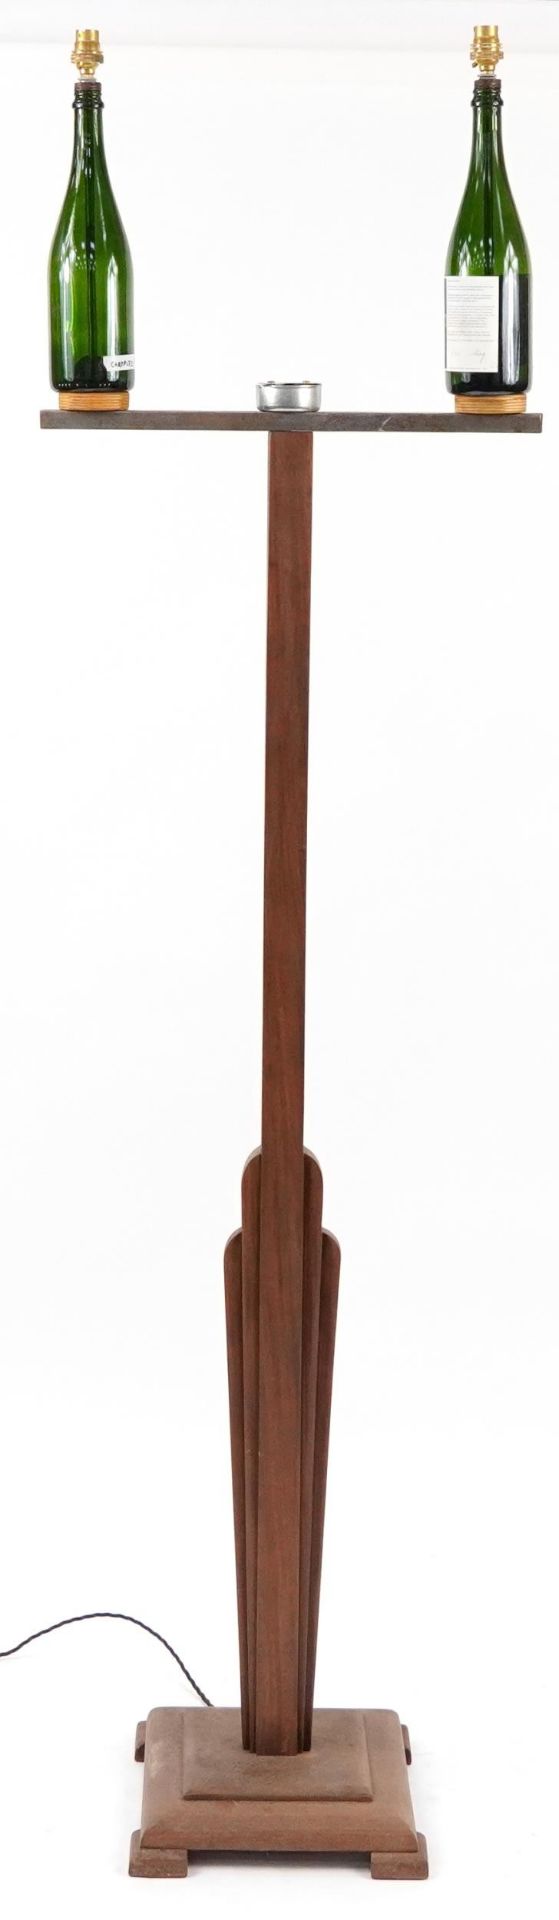 Carved oak and champagne bottle standard lamp, 190cm high - Bild 2 aus 2